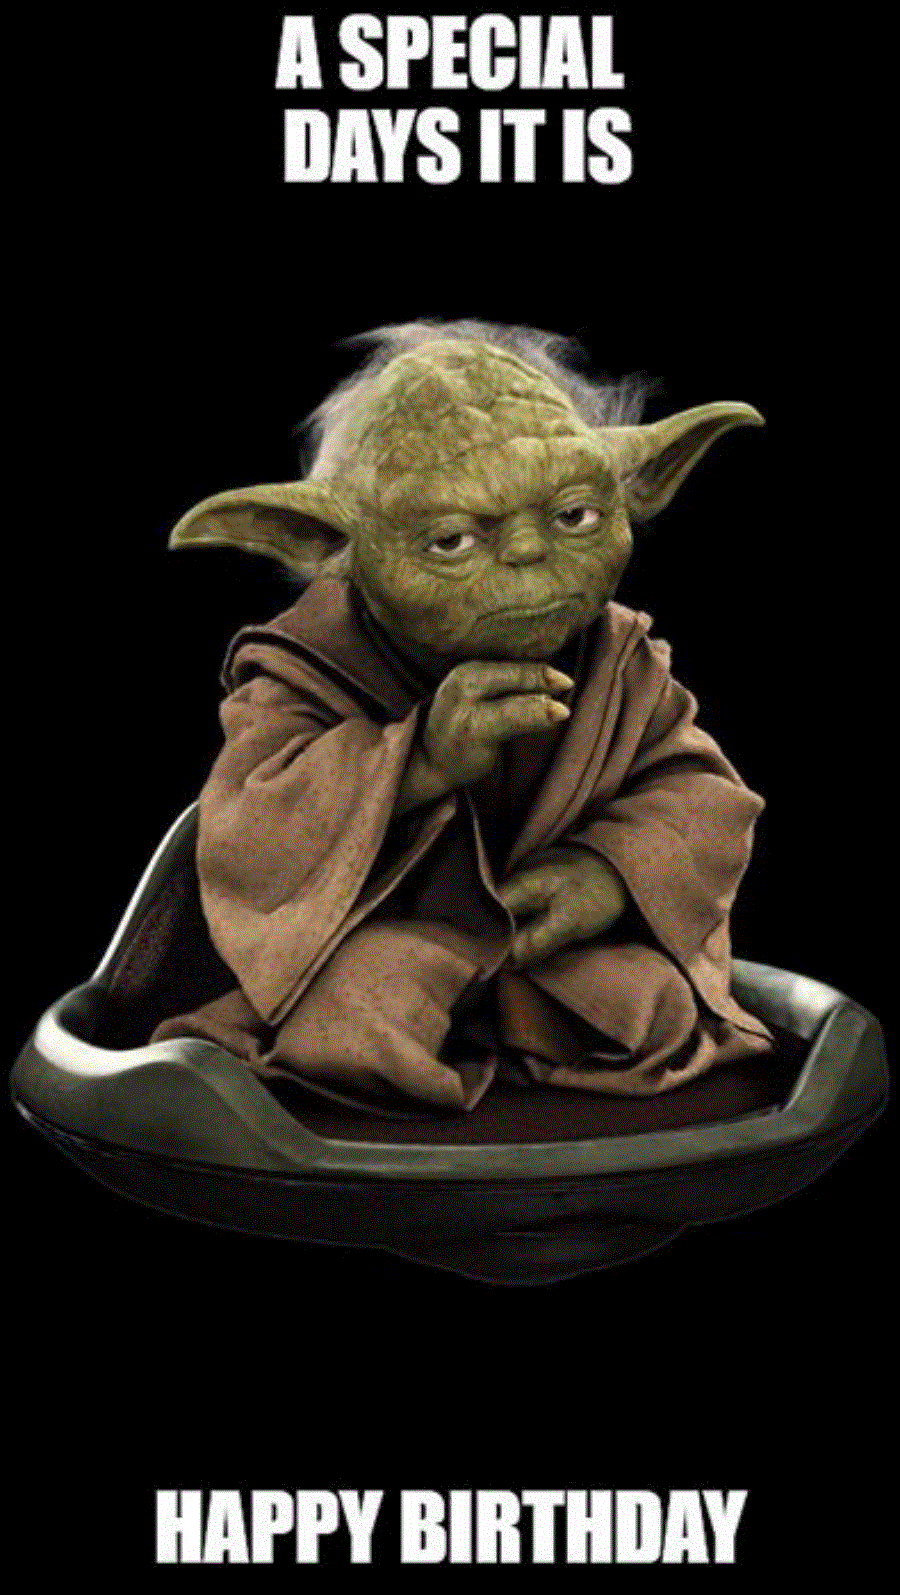 Happy Birthday Yoda Star Wars Meme Funny Images download